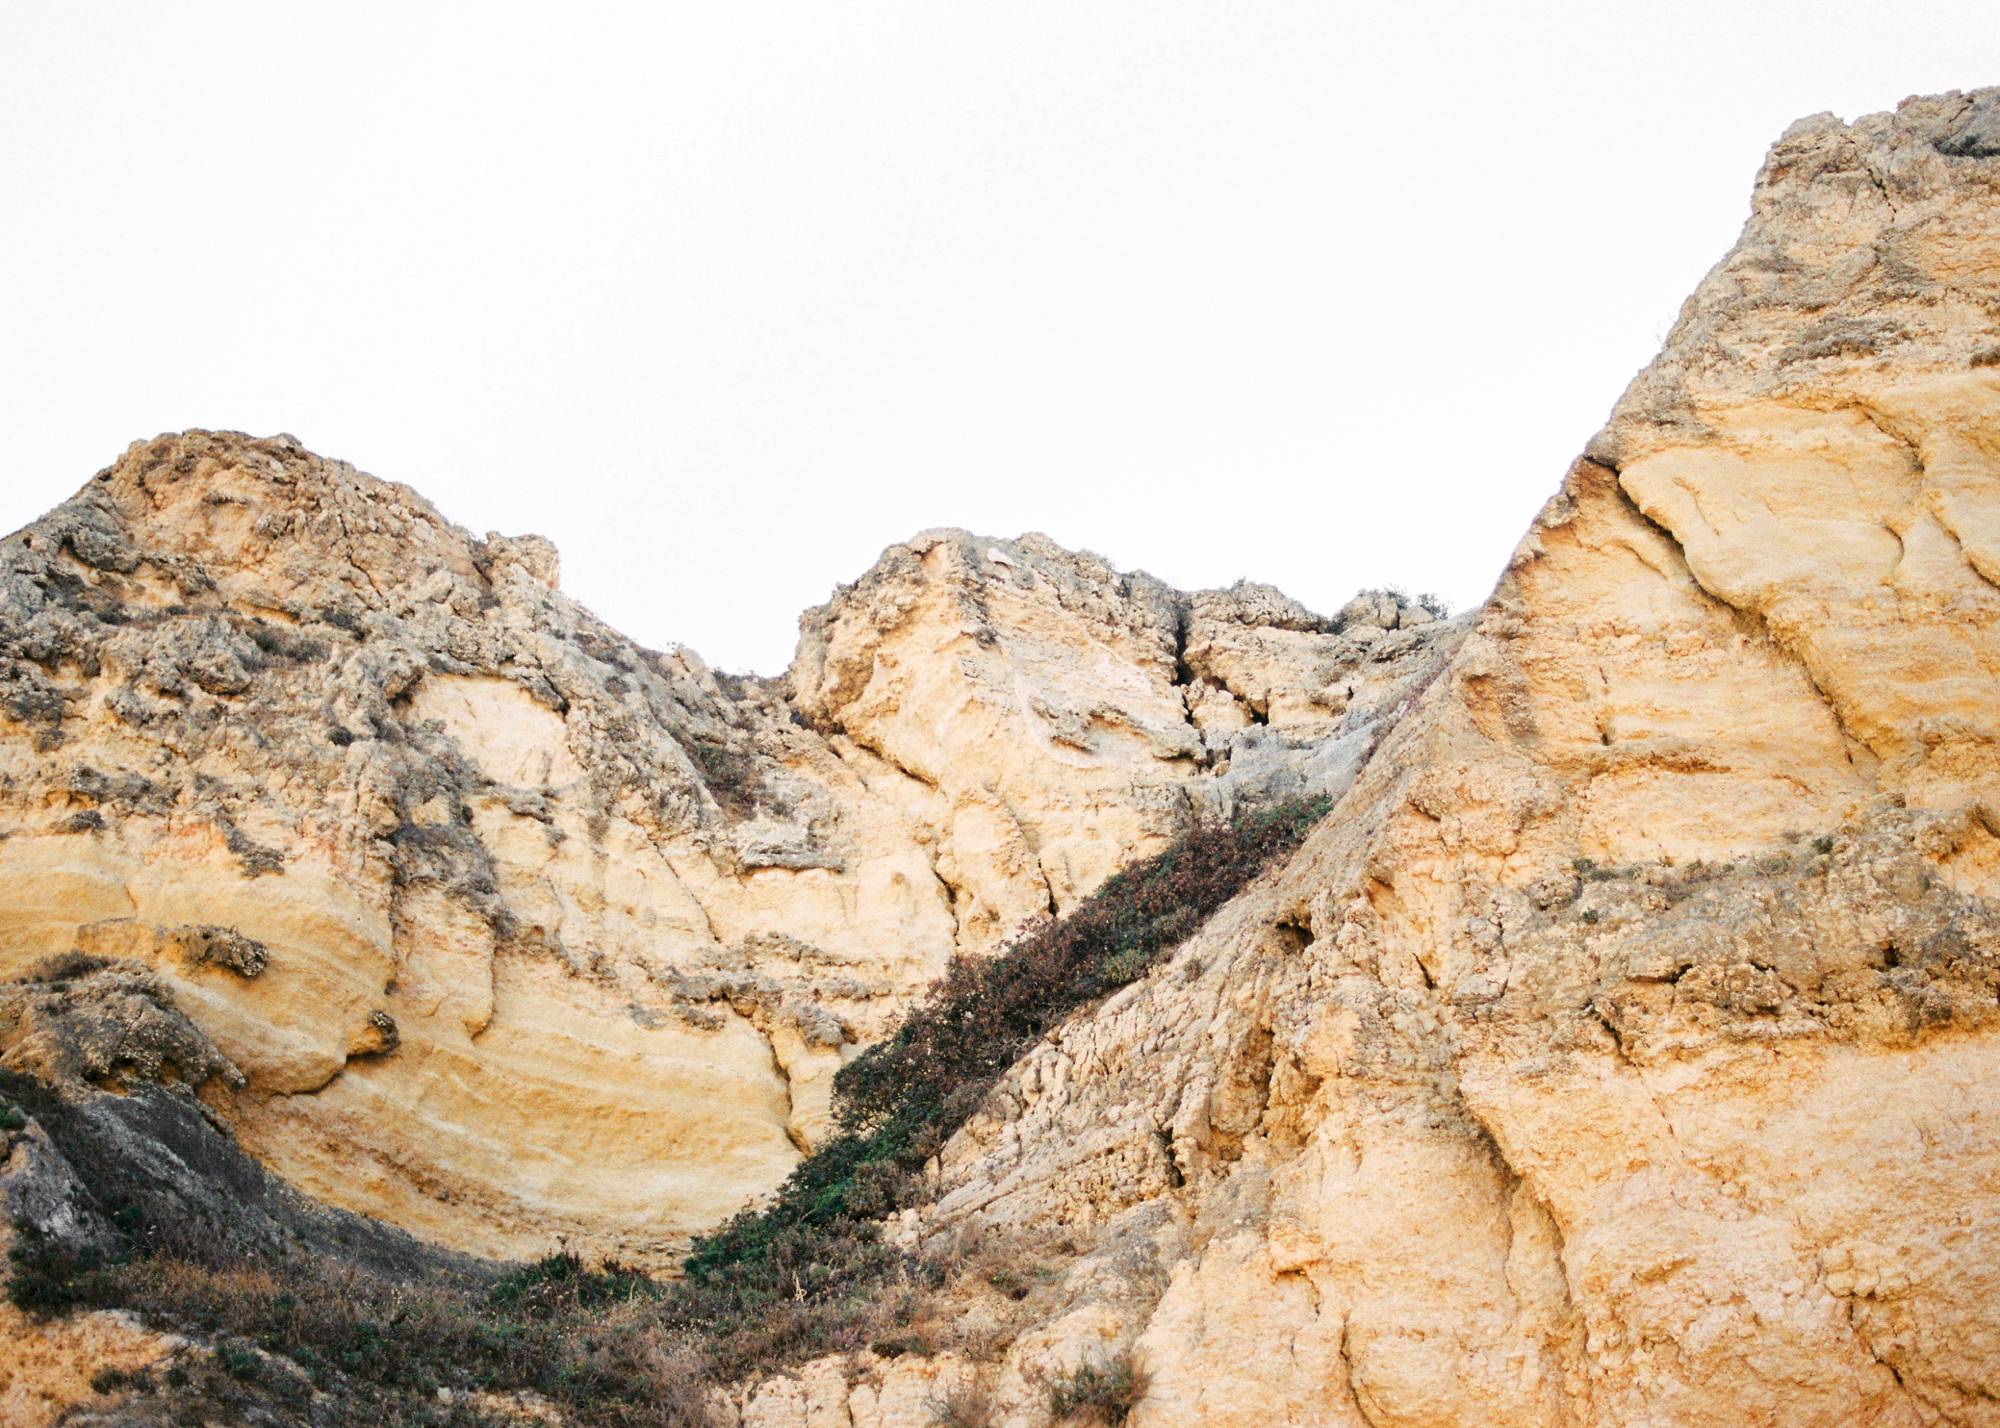 Fine art photographer Algarve coast Portugal - Mountains of Algarve coast